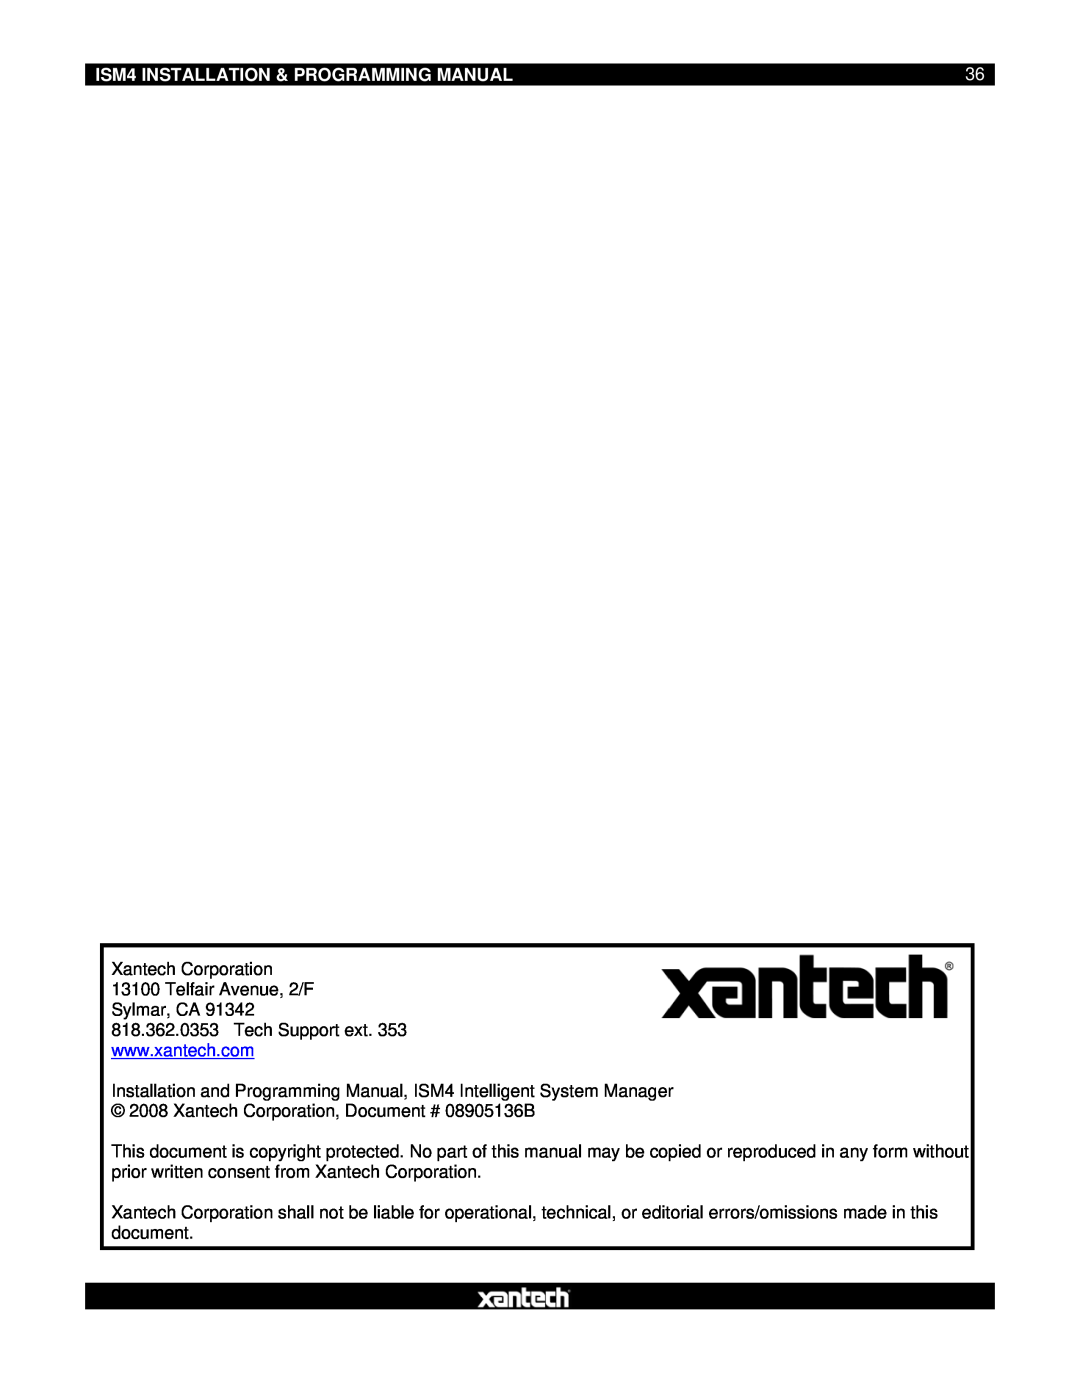 Xantech manual ISM4 INSTALLATION & PROGRAMMING MANUAL 